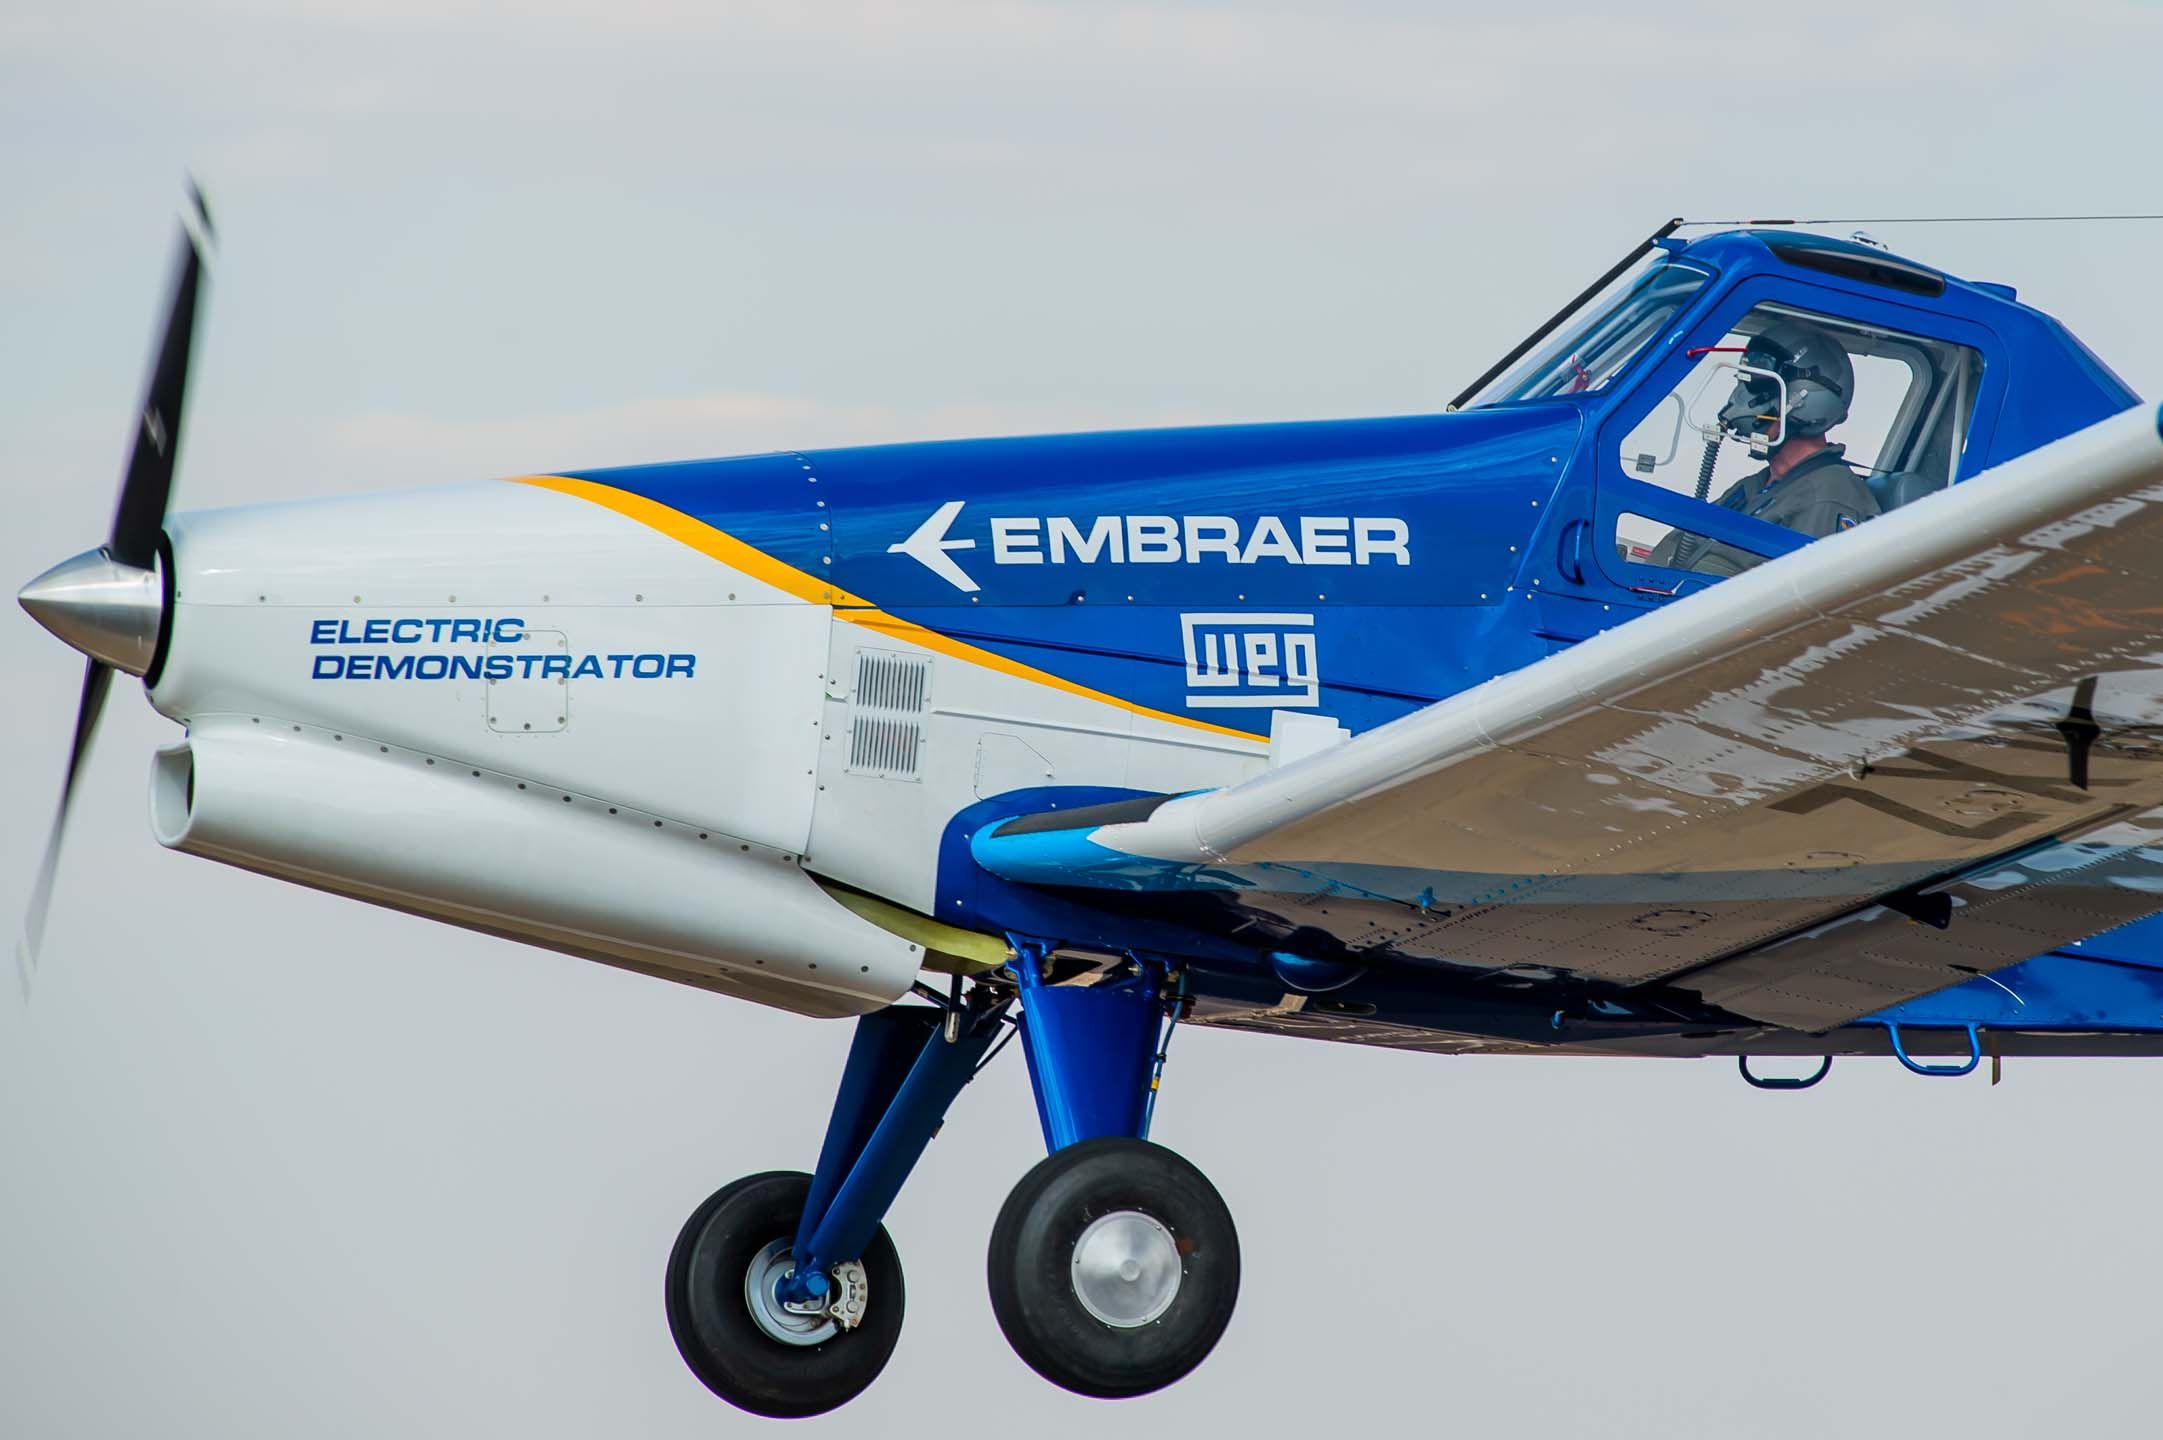 Embraer Electric Demonstrator